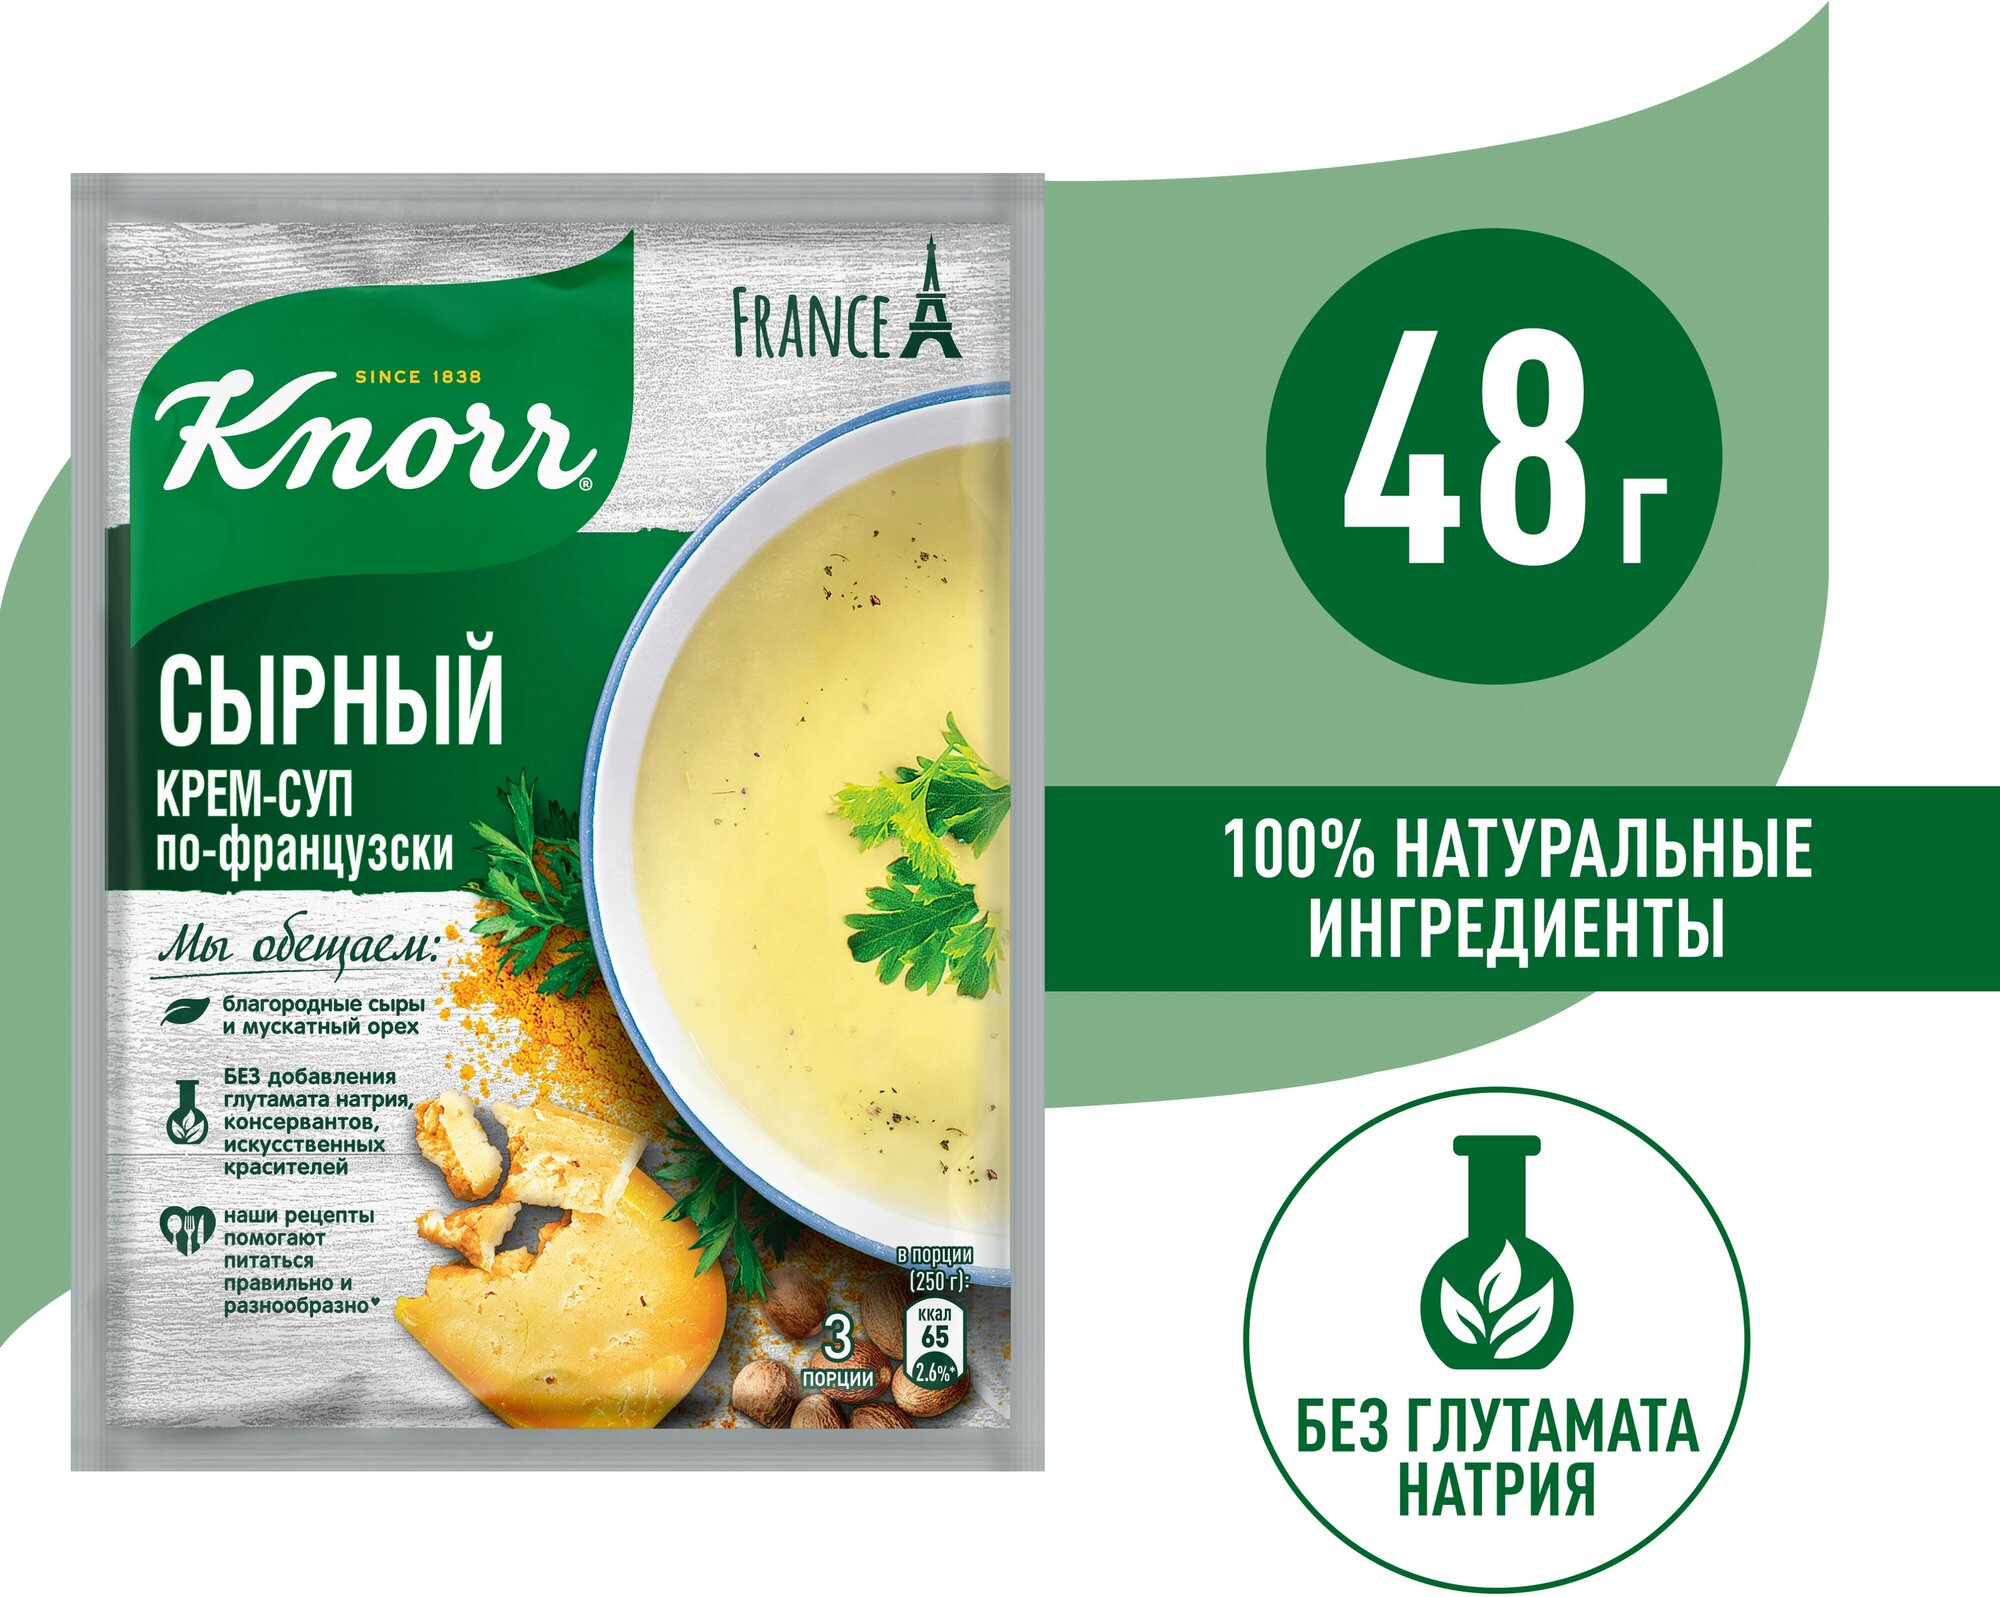 Крем-суп Knorr "Сырный", по-французски, 48гр - фото №5